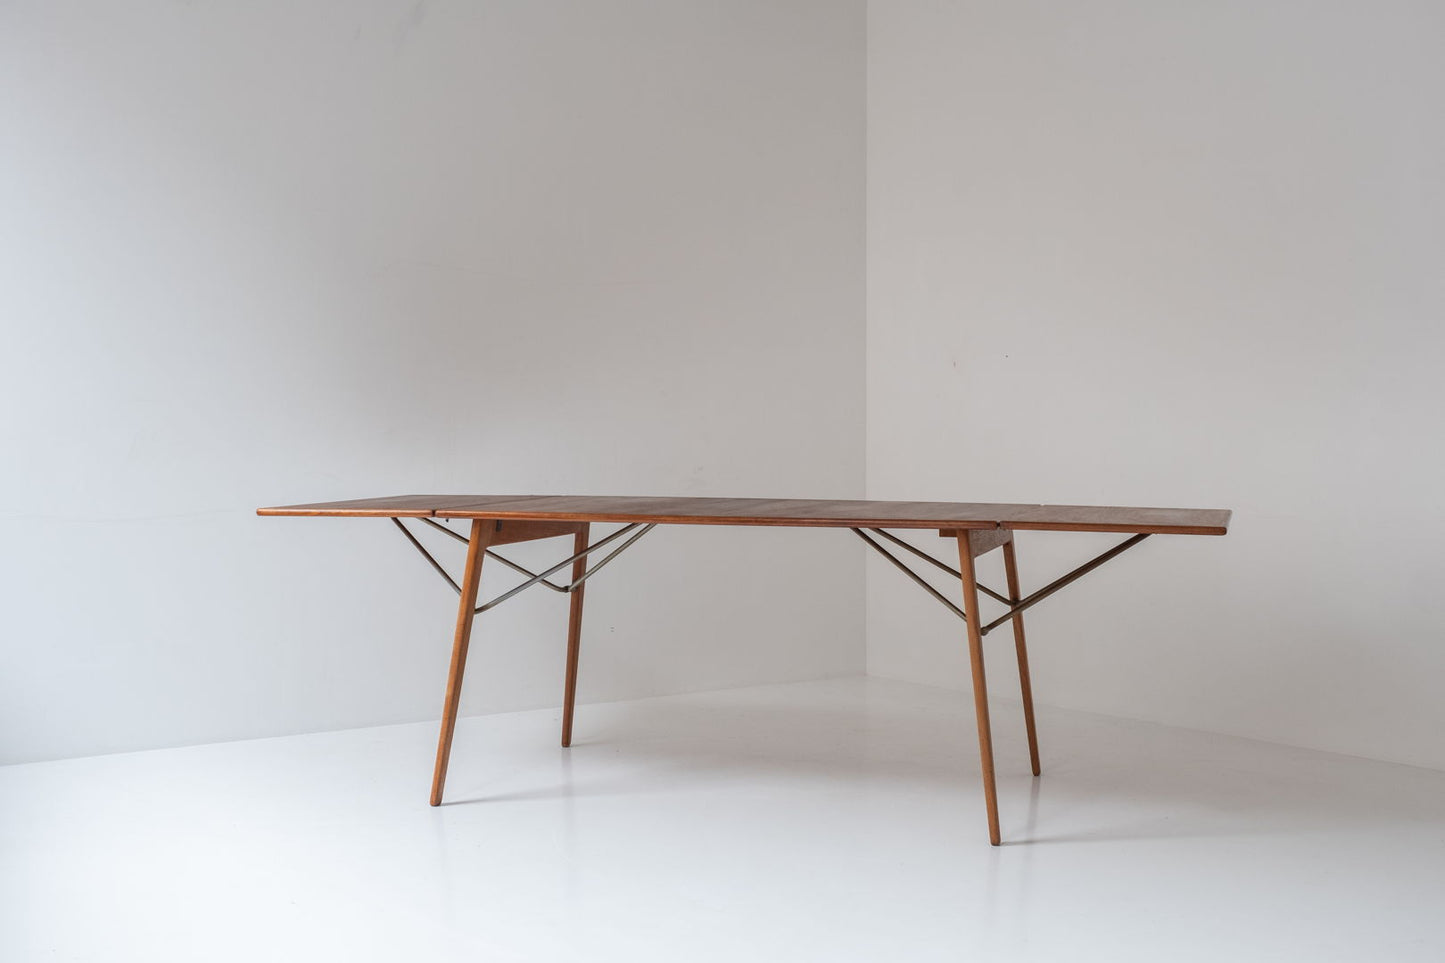 Rare version of this drop leaf table model 162 by Børge Mogensen for Søborg Mobelfabrik, Denmark 1953.